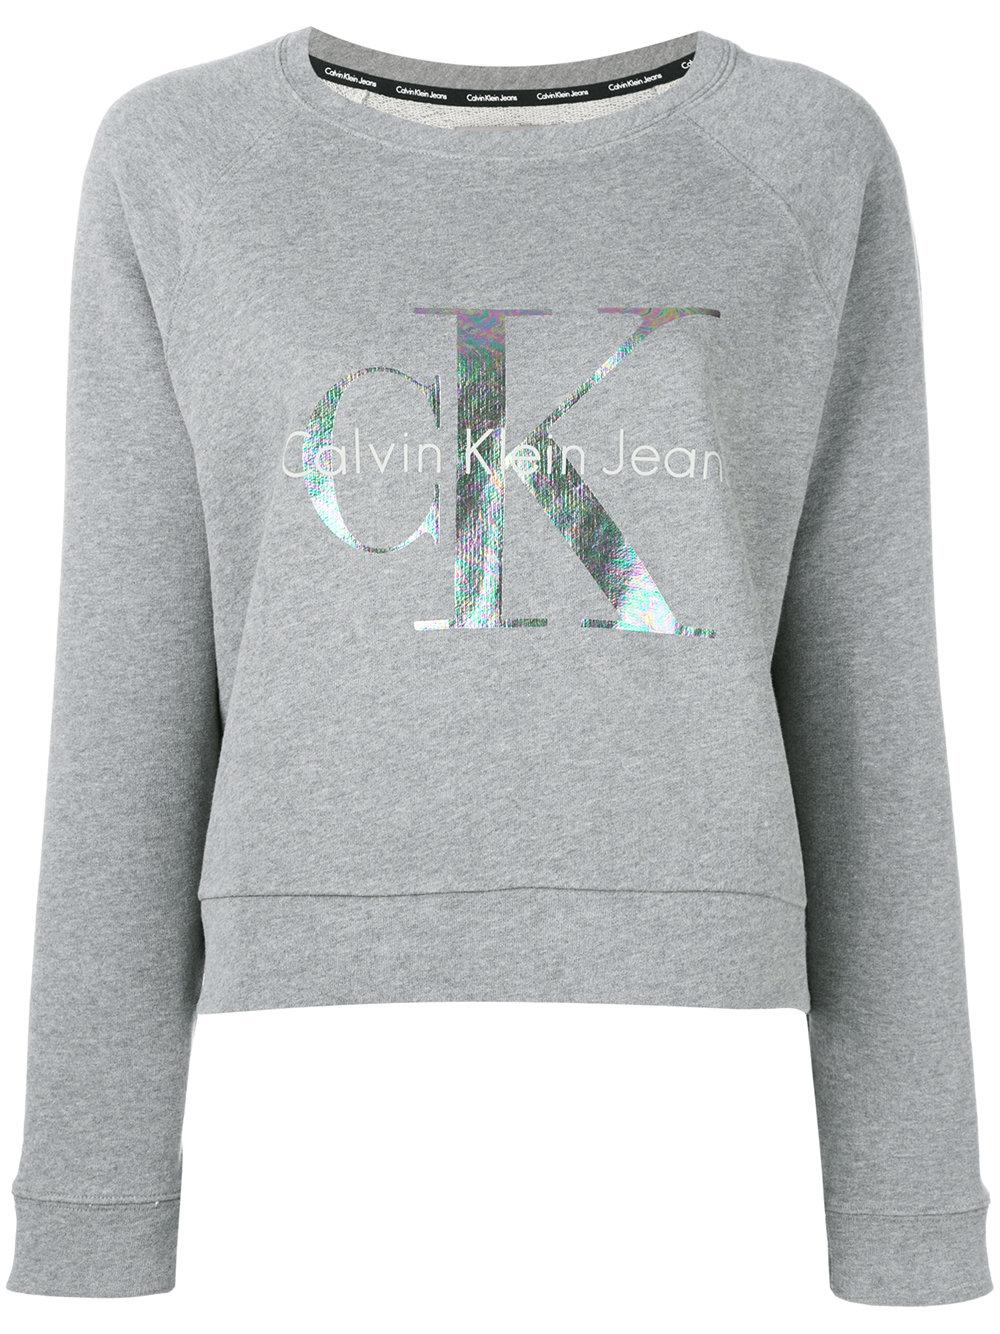 Lyst - Calvin Klein Jeans Logo Print Sweatshirt in Gray